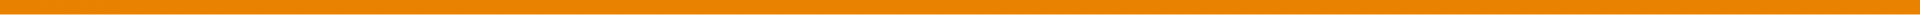 orange dvider